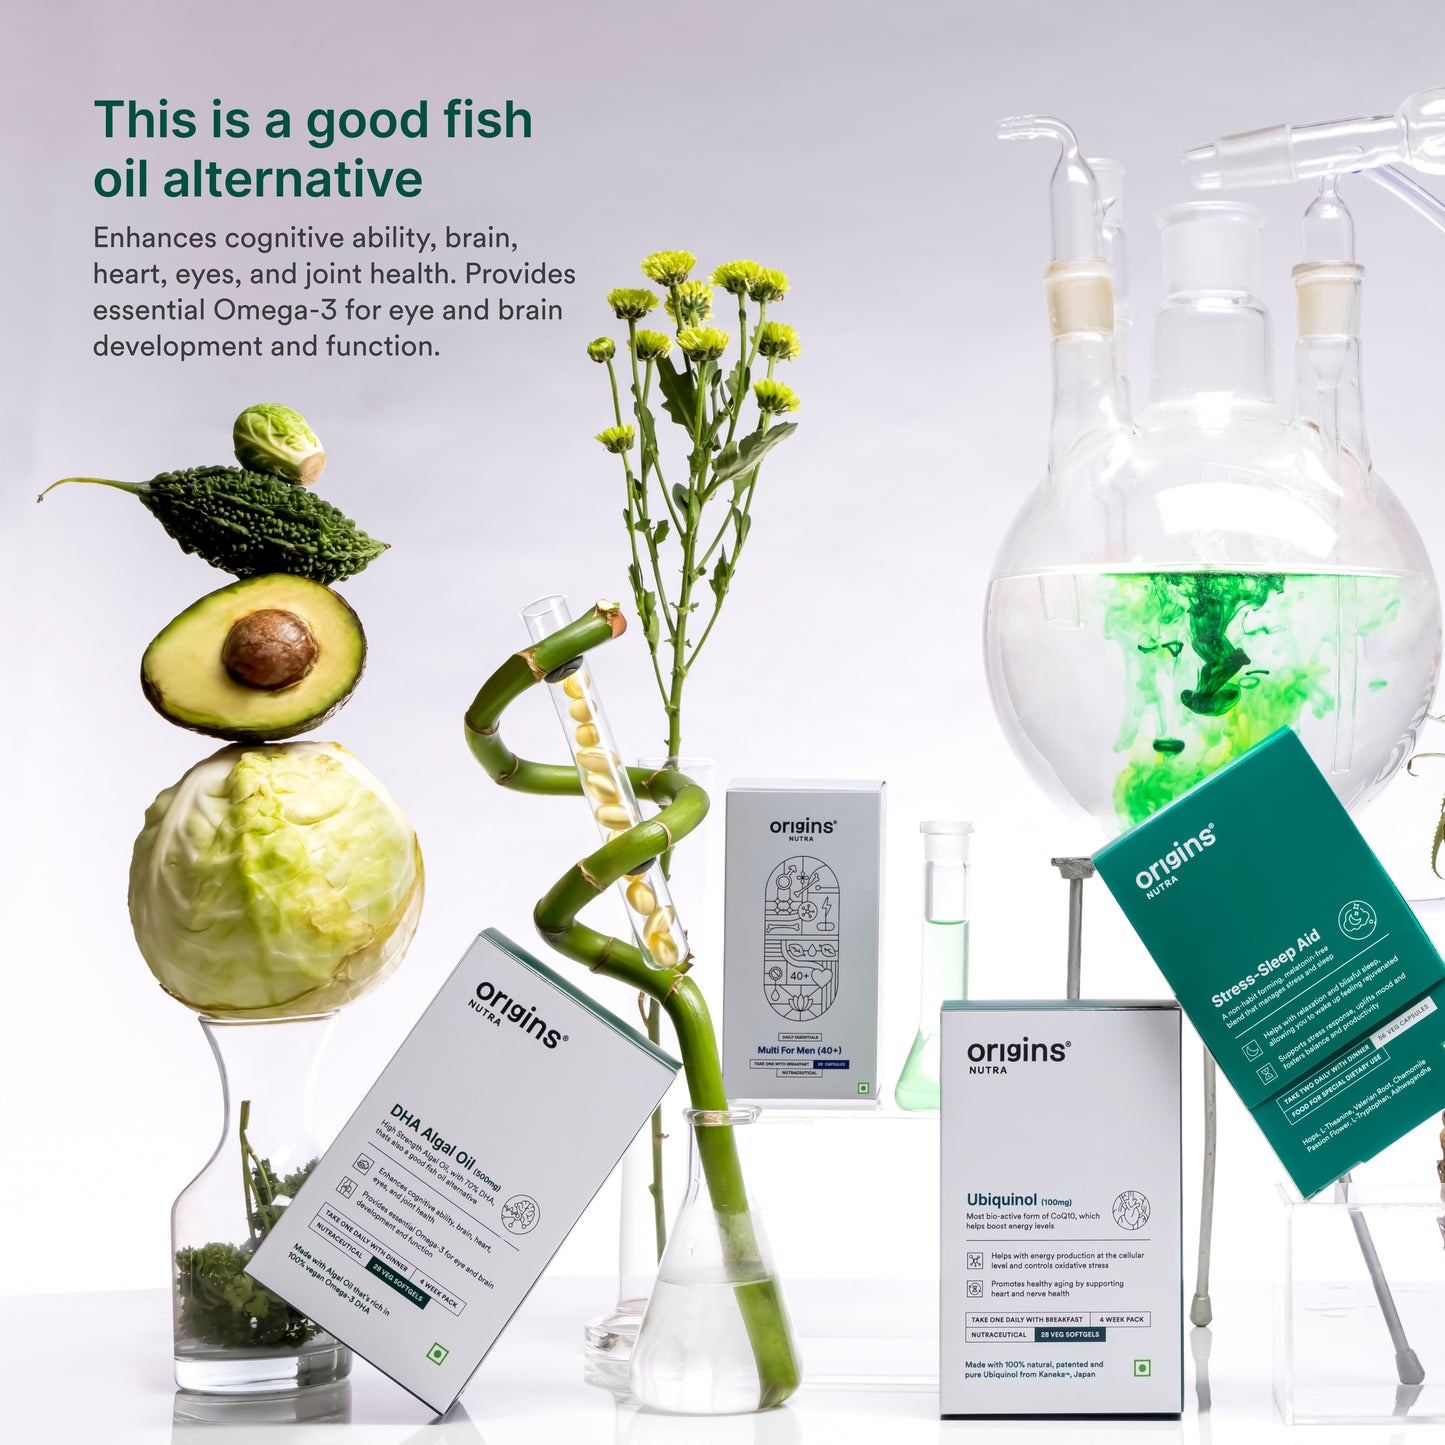 Origins Nutra DHA Algal Oil |Plant-Based High Strength 70% Omega 3 DHA, Improves Memory, Brain & Eye Health |Healthy Aging| Plant Based |GMP Certified | Non-GMO |For Men & Women | 28 Softgels | 4 Weeks Pack